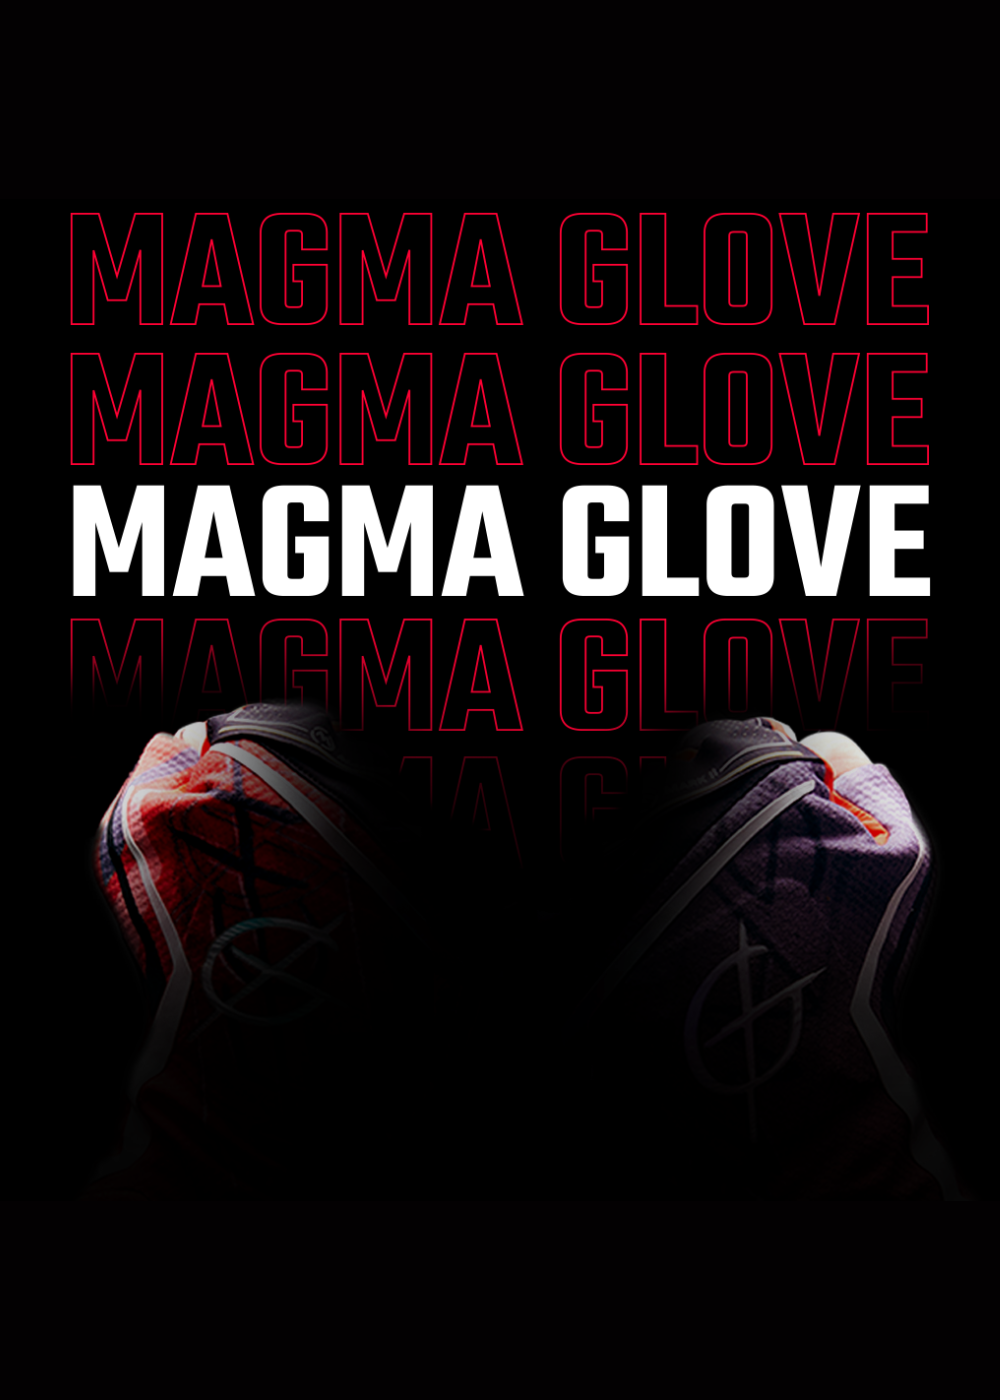 The Magma Glove 